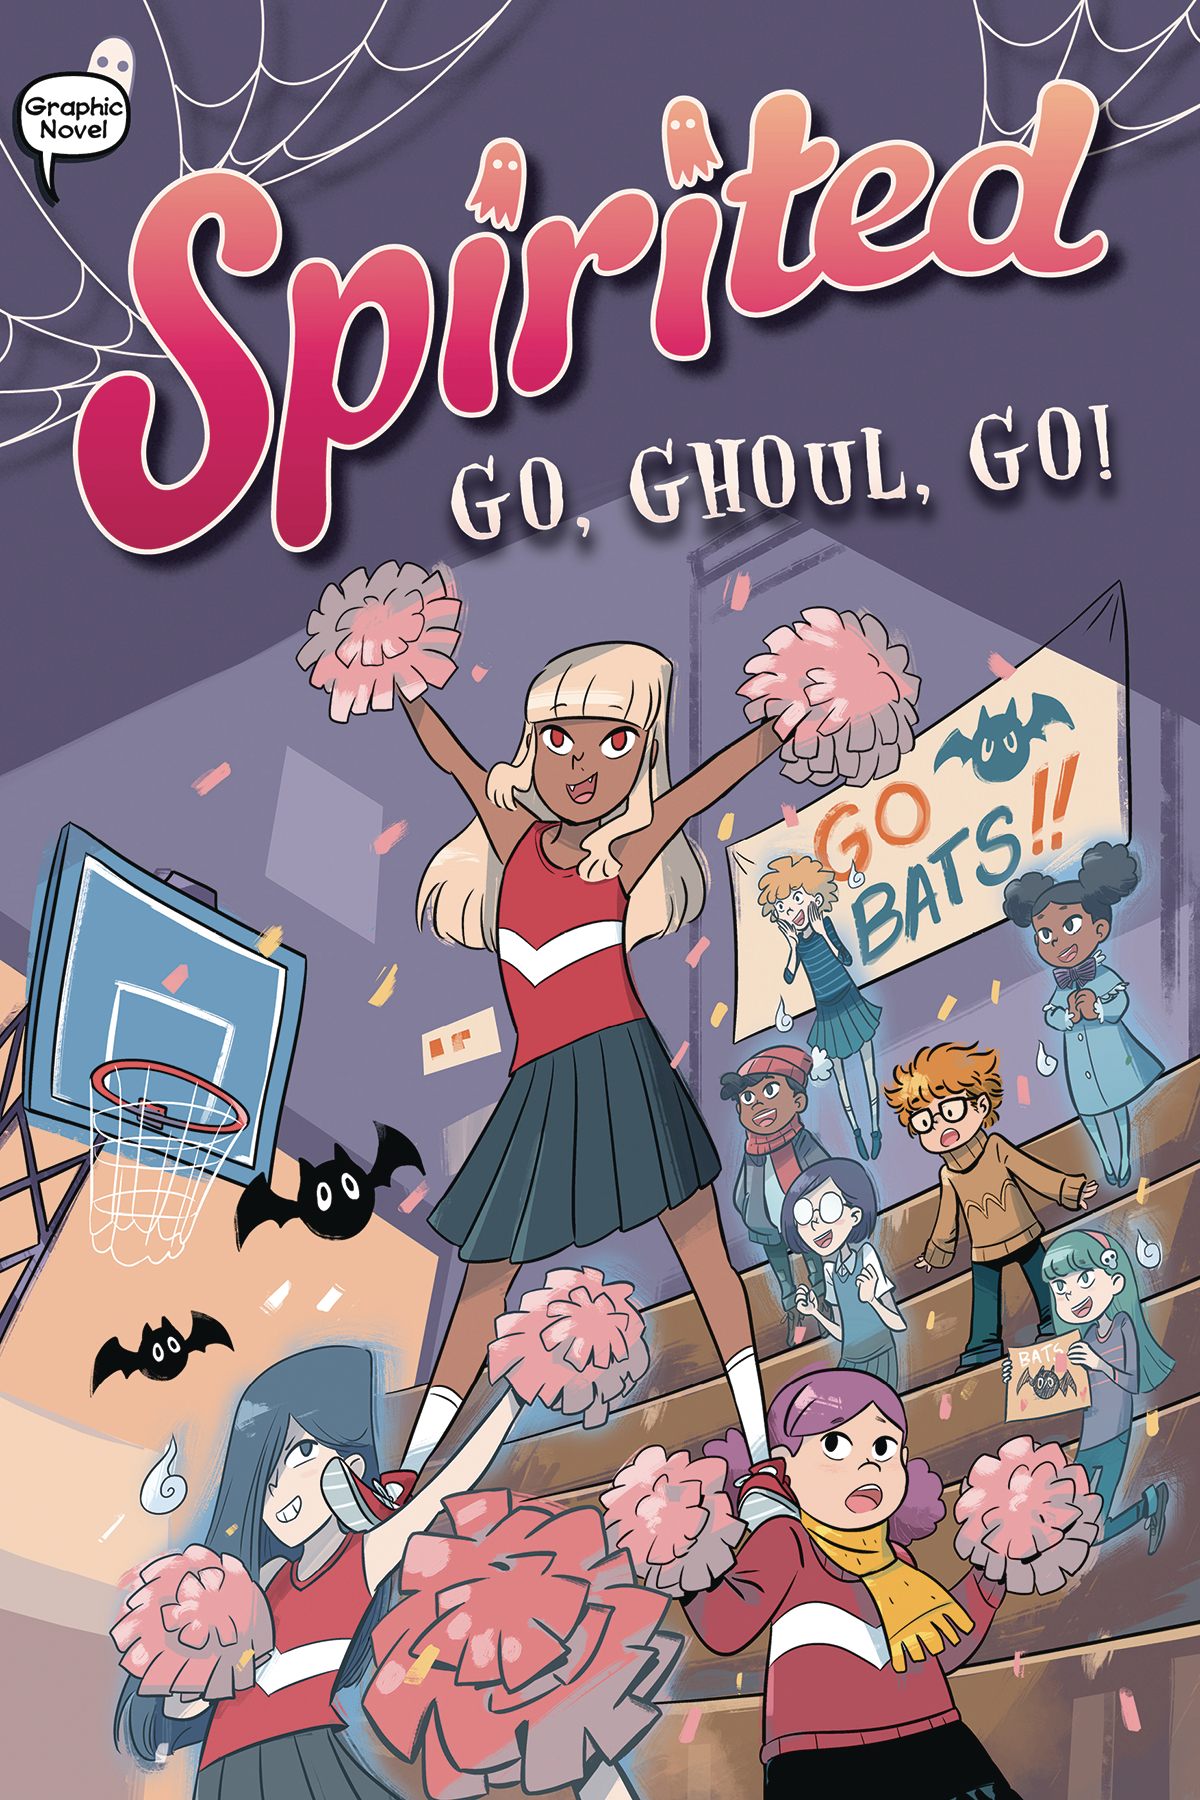 Spirited Graphic Novel Volume 2 Go Ghoul Go